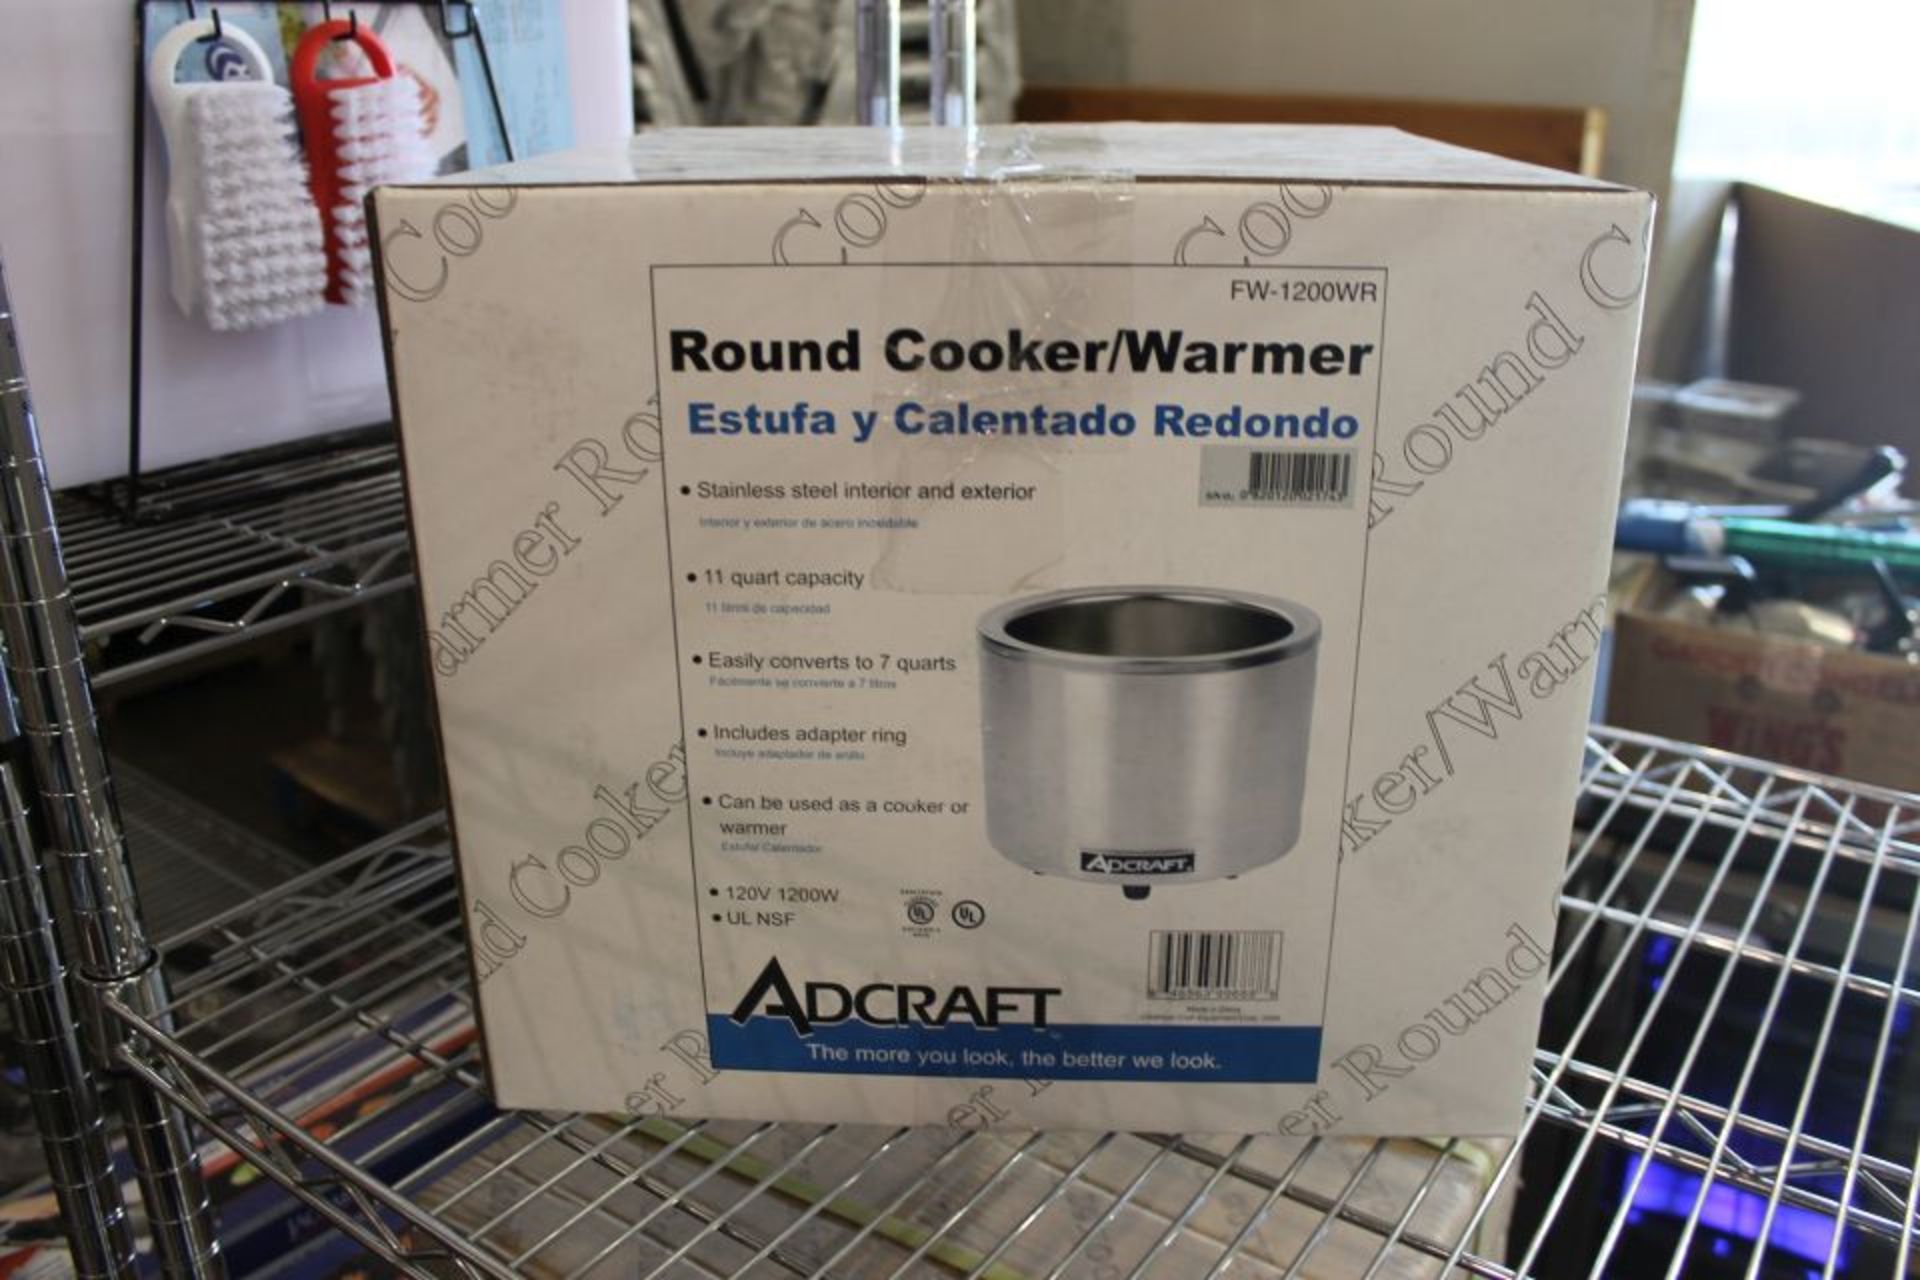 AdCraft round cooker/warmer model FW-1200WR